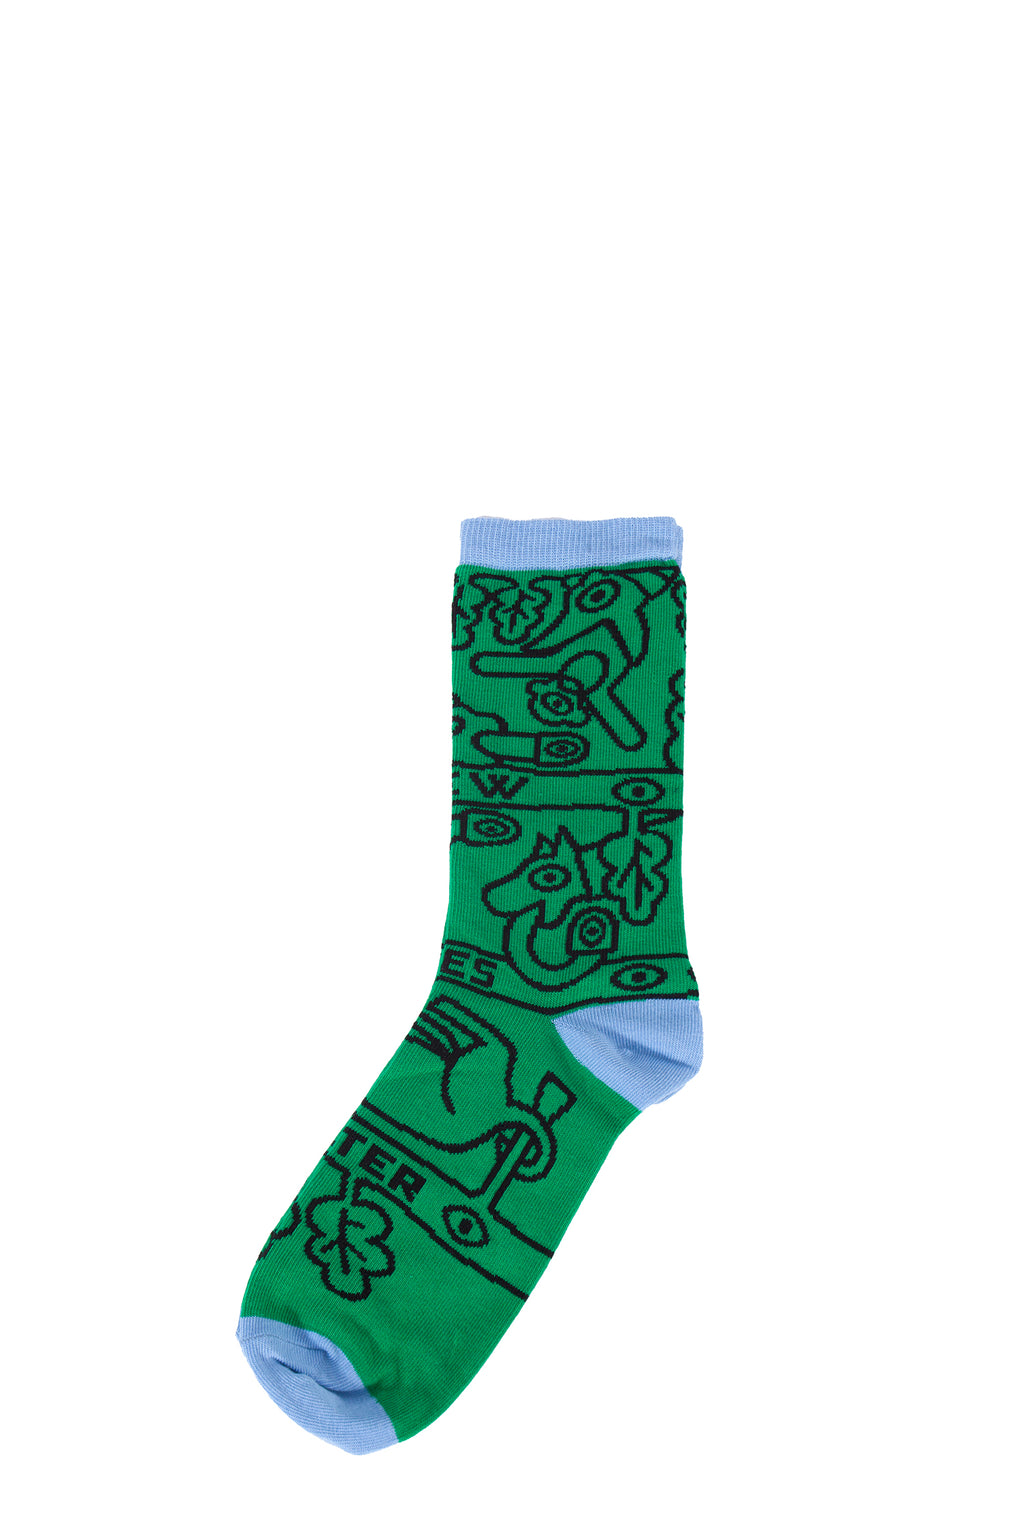 NEW EYES Socks - Green